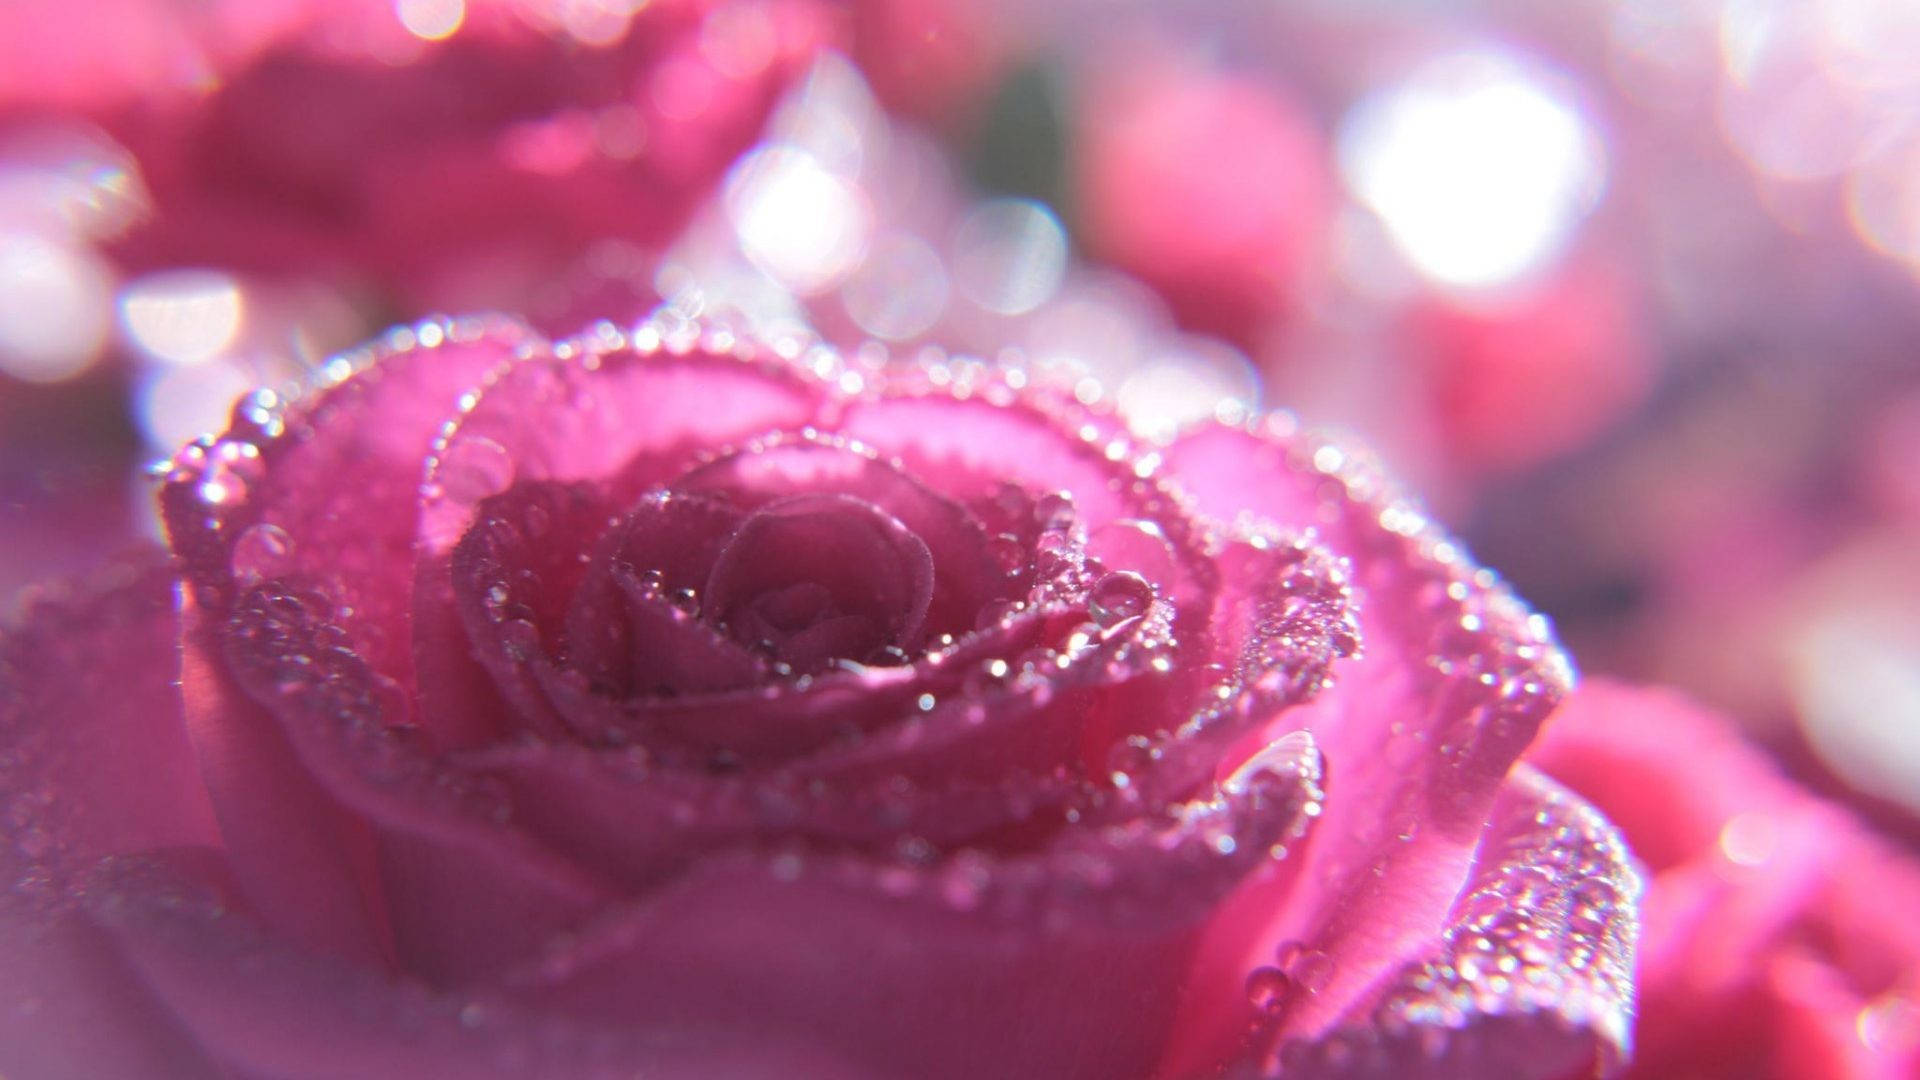 Sparkle Moon Roses - Flower Explosion